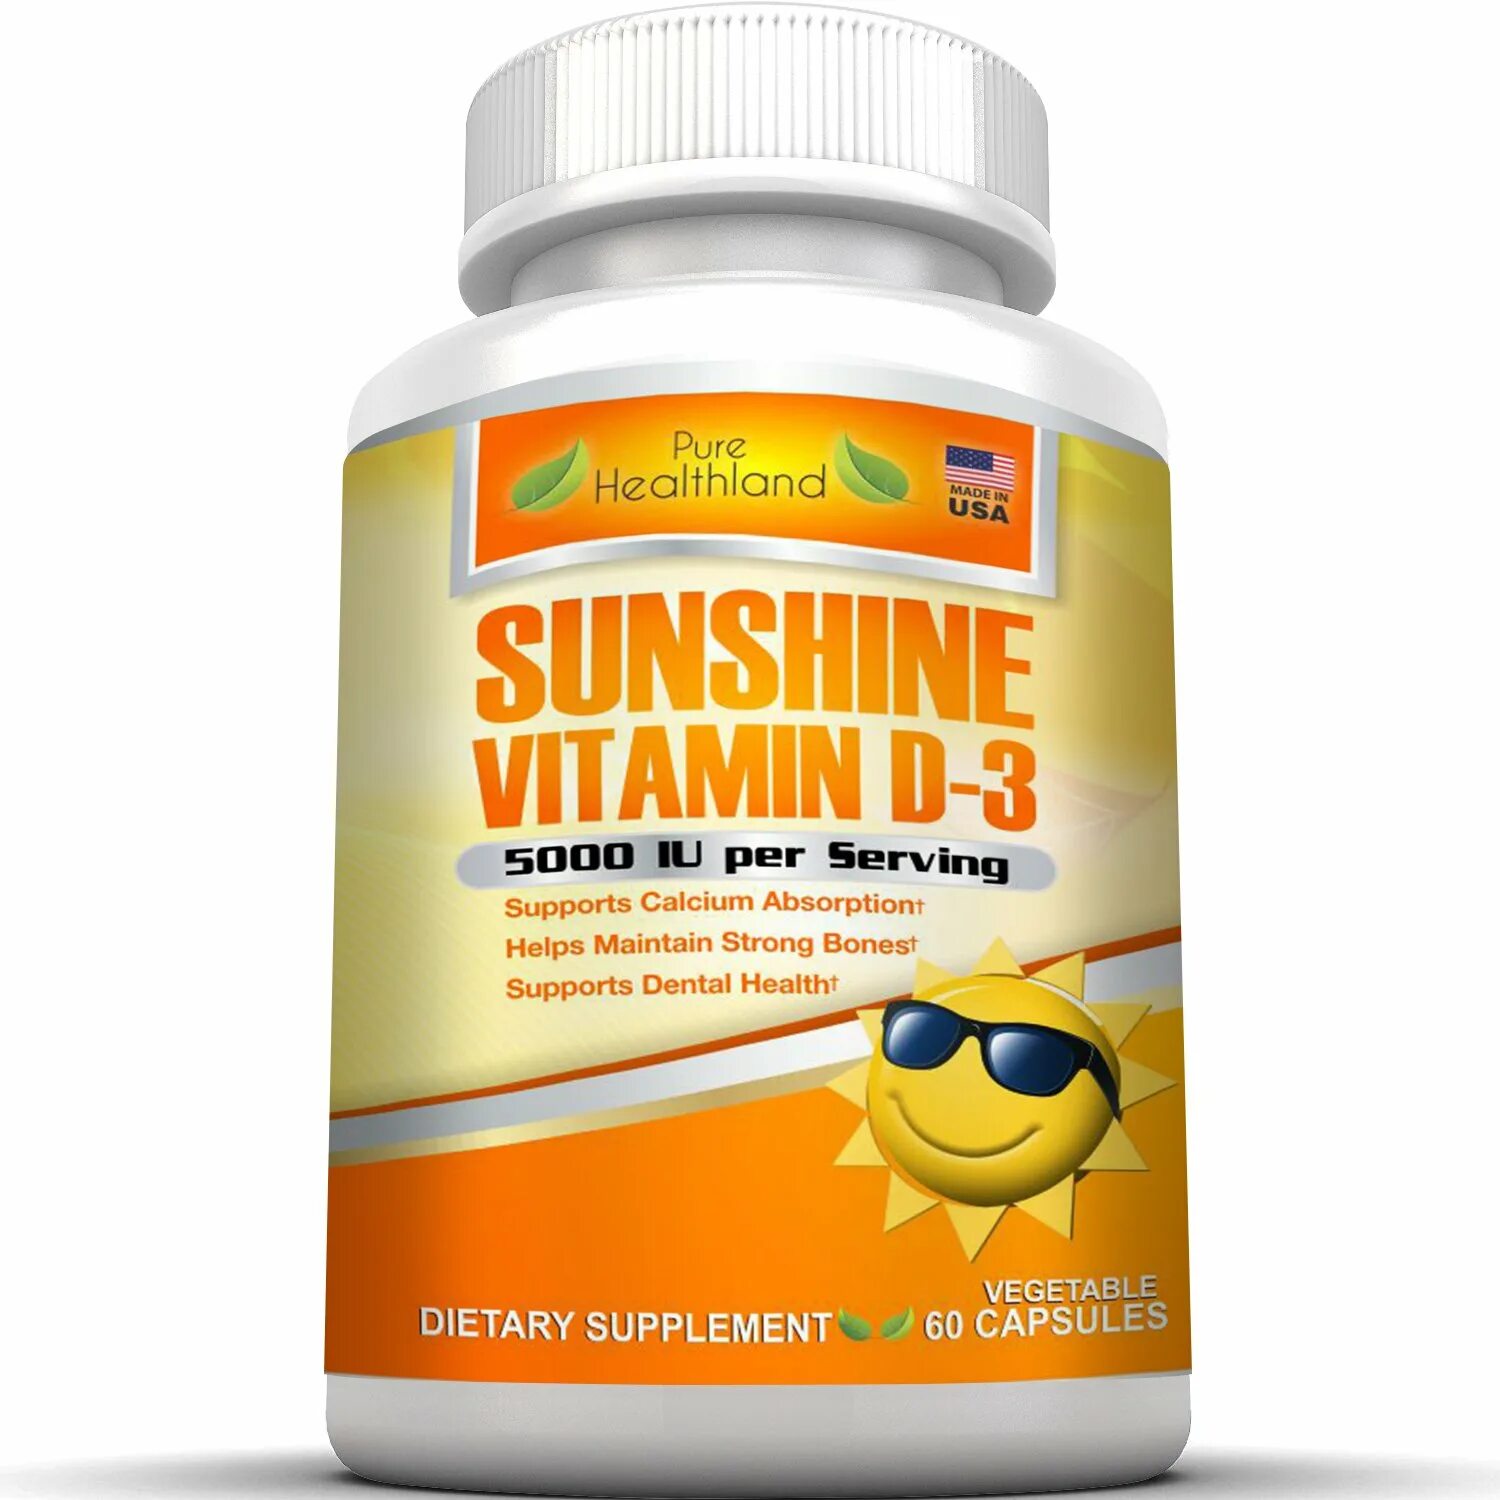 Radiance vitamins. Витамин д 5000. Витамин д Sunshine. Бест натуралс витамин д 3. High Potency Vitamin d3.